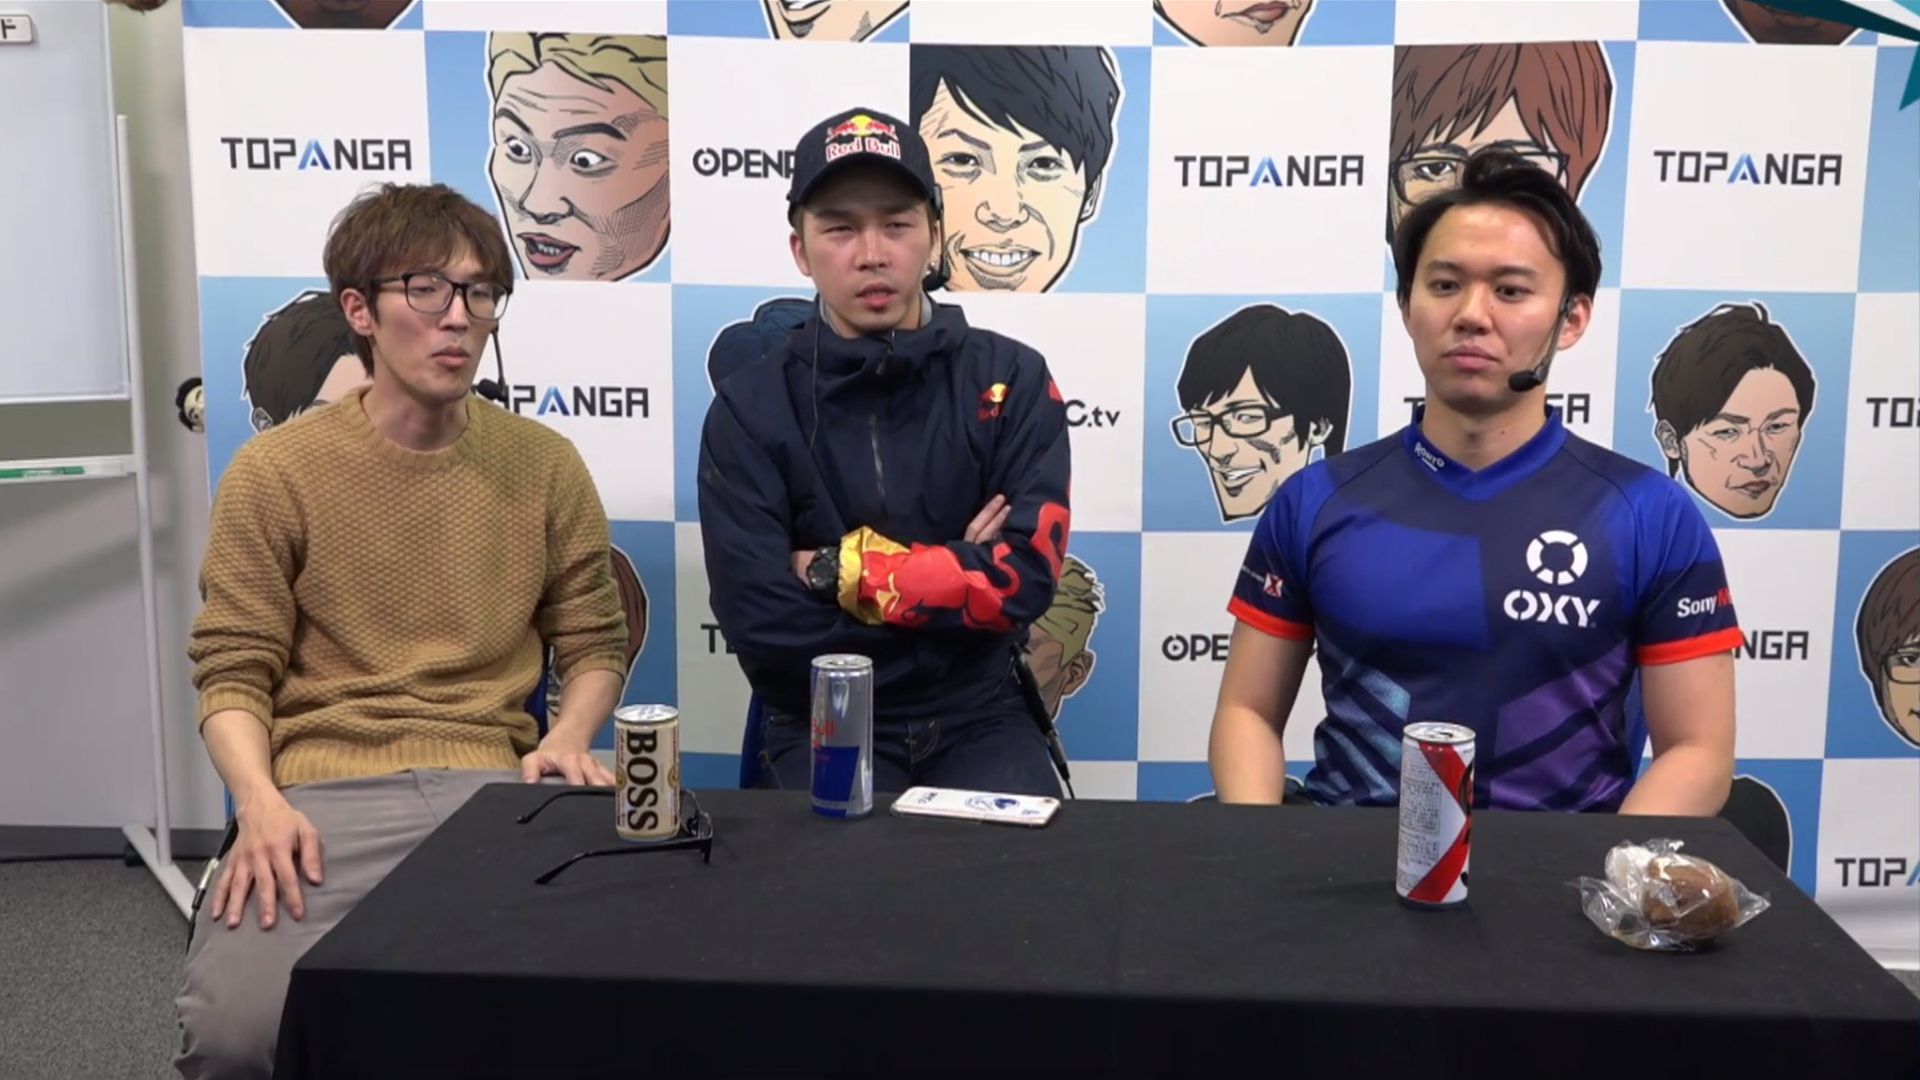 Tokido, Gachikun, and Mago reveal their Street Fighter V: Champion